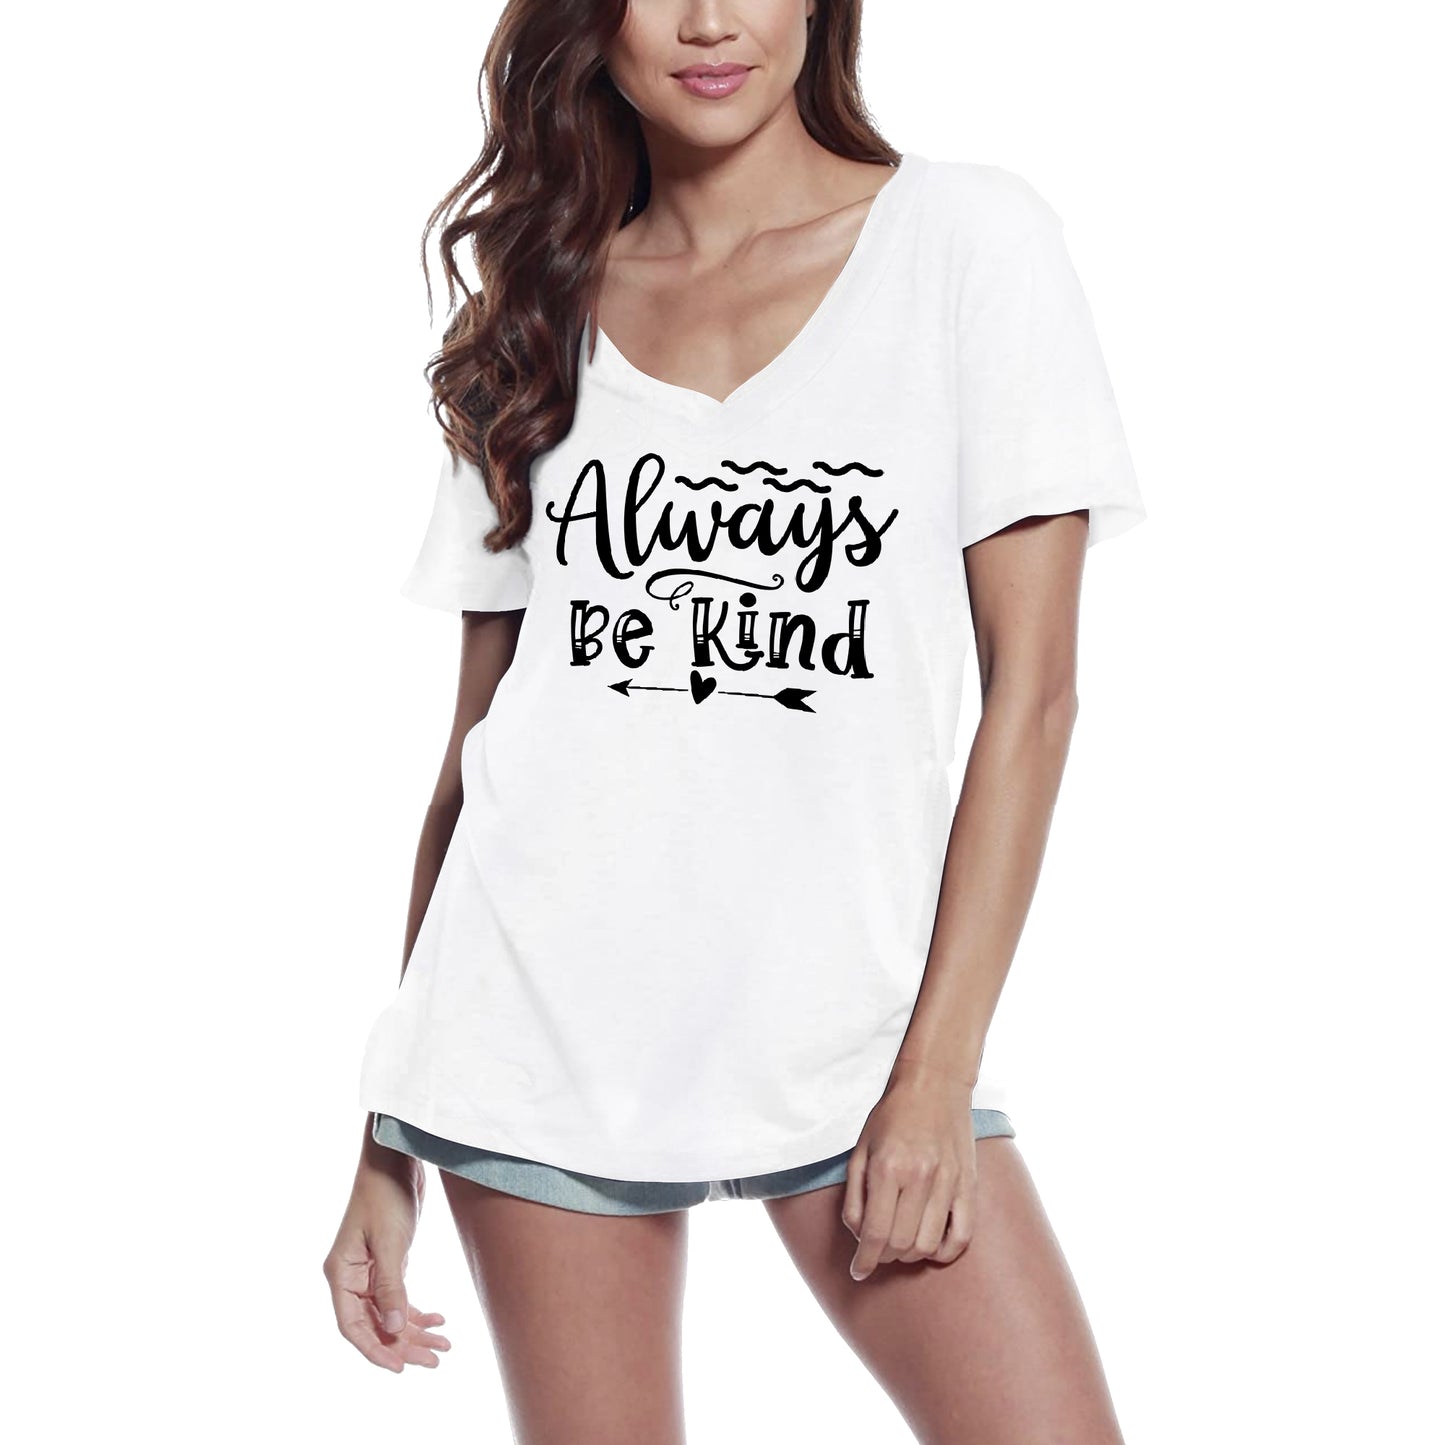 ULTRABASIC Women's Novelty T-Shirt Always Be Kind - Short Sleeve Tee Shirt Tops